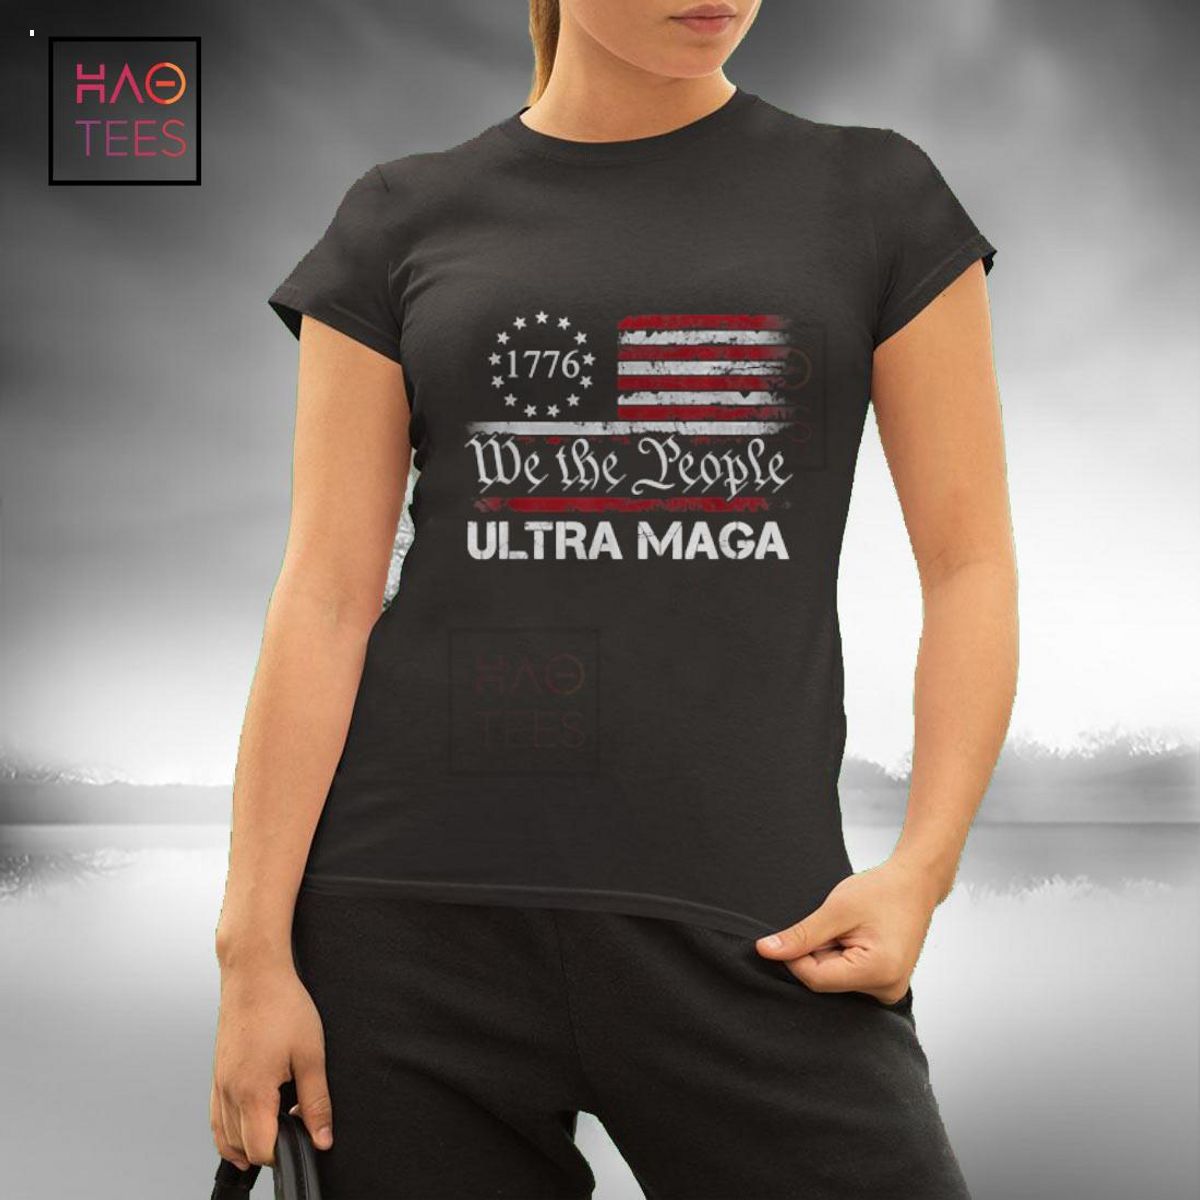 Ultra MAGA - We The People Proud Republican USA Flag Shirt